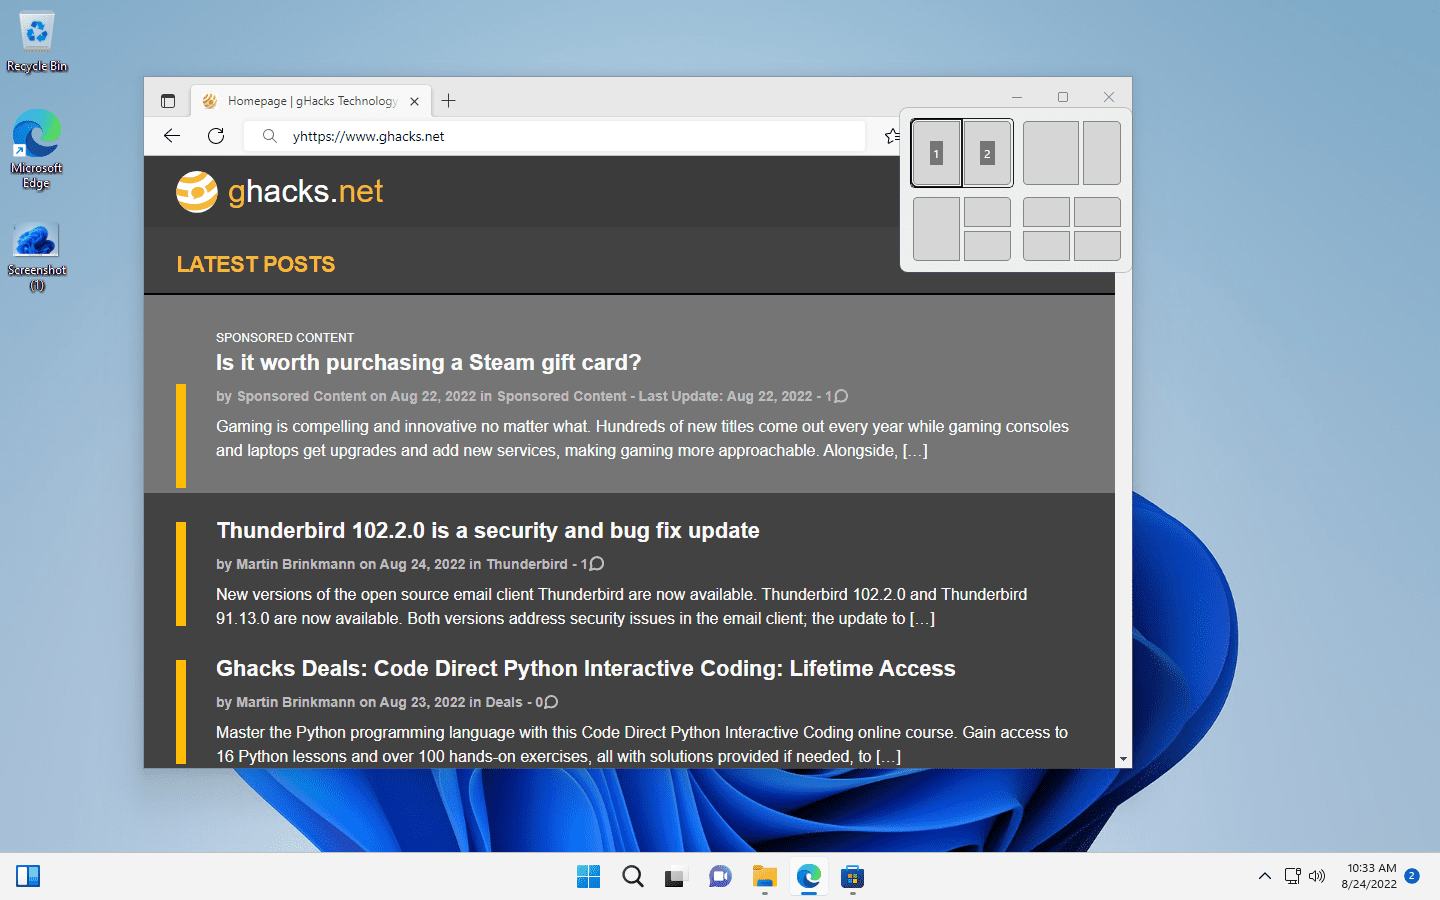 Windows 11 version 22H2: snap assist changes windows-11-snap-assist-select-layout-position.png